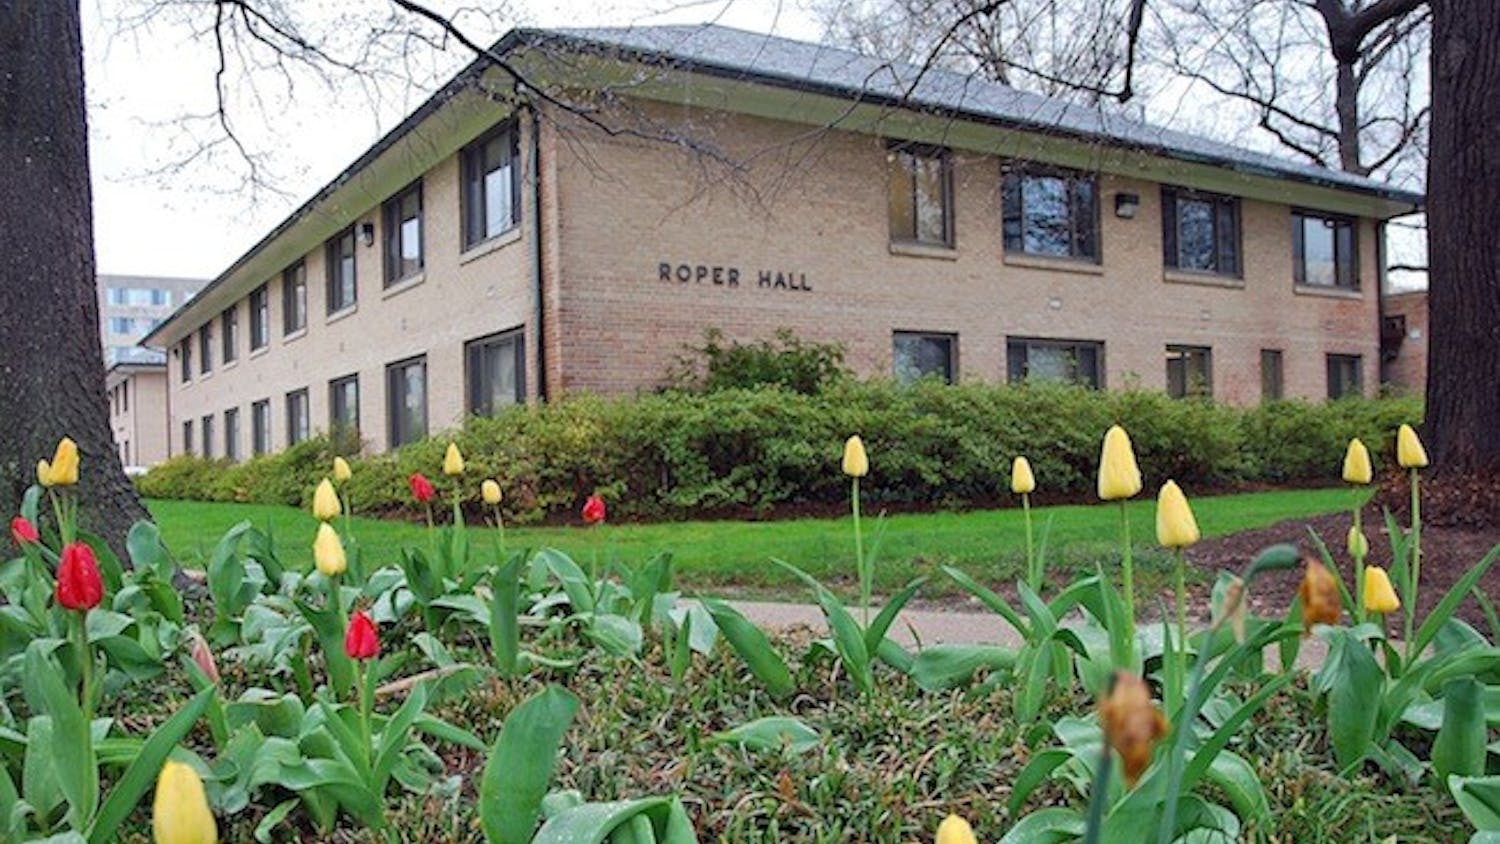 Roper Hall will house freshmen participating in the University College program.